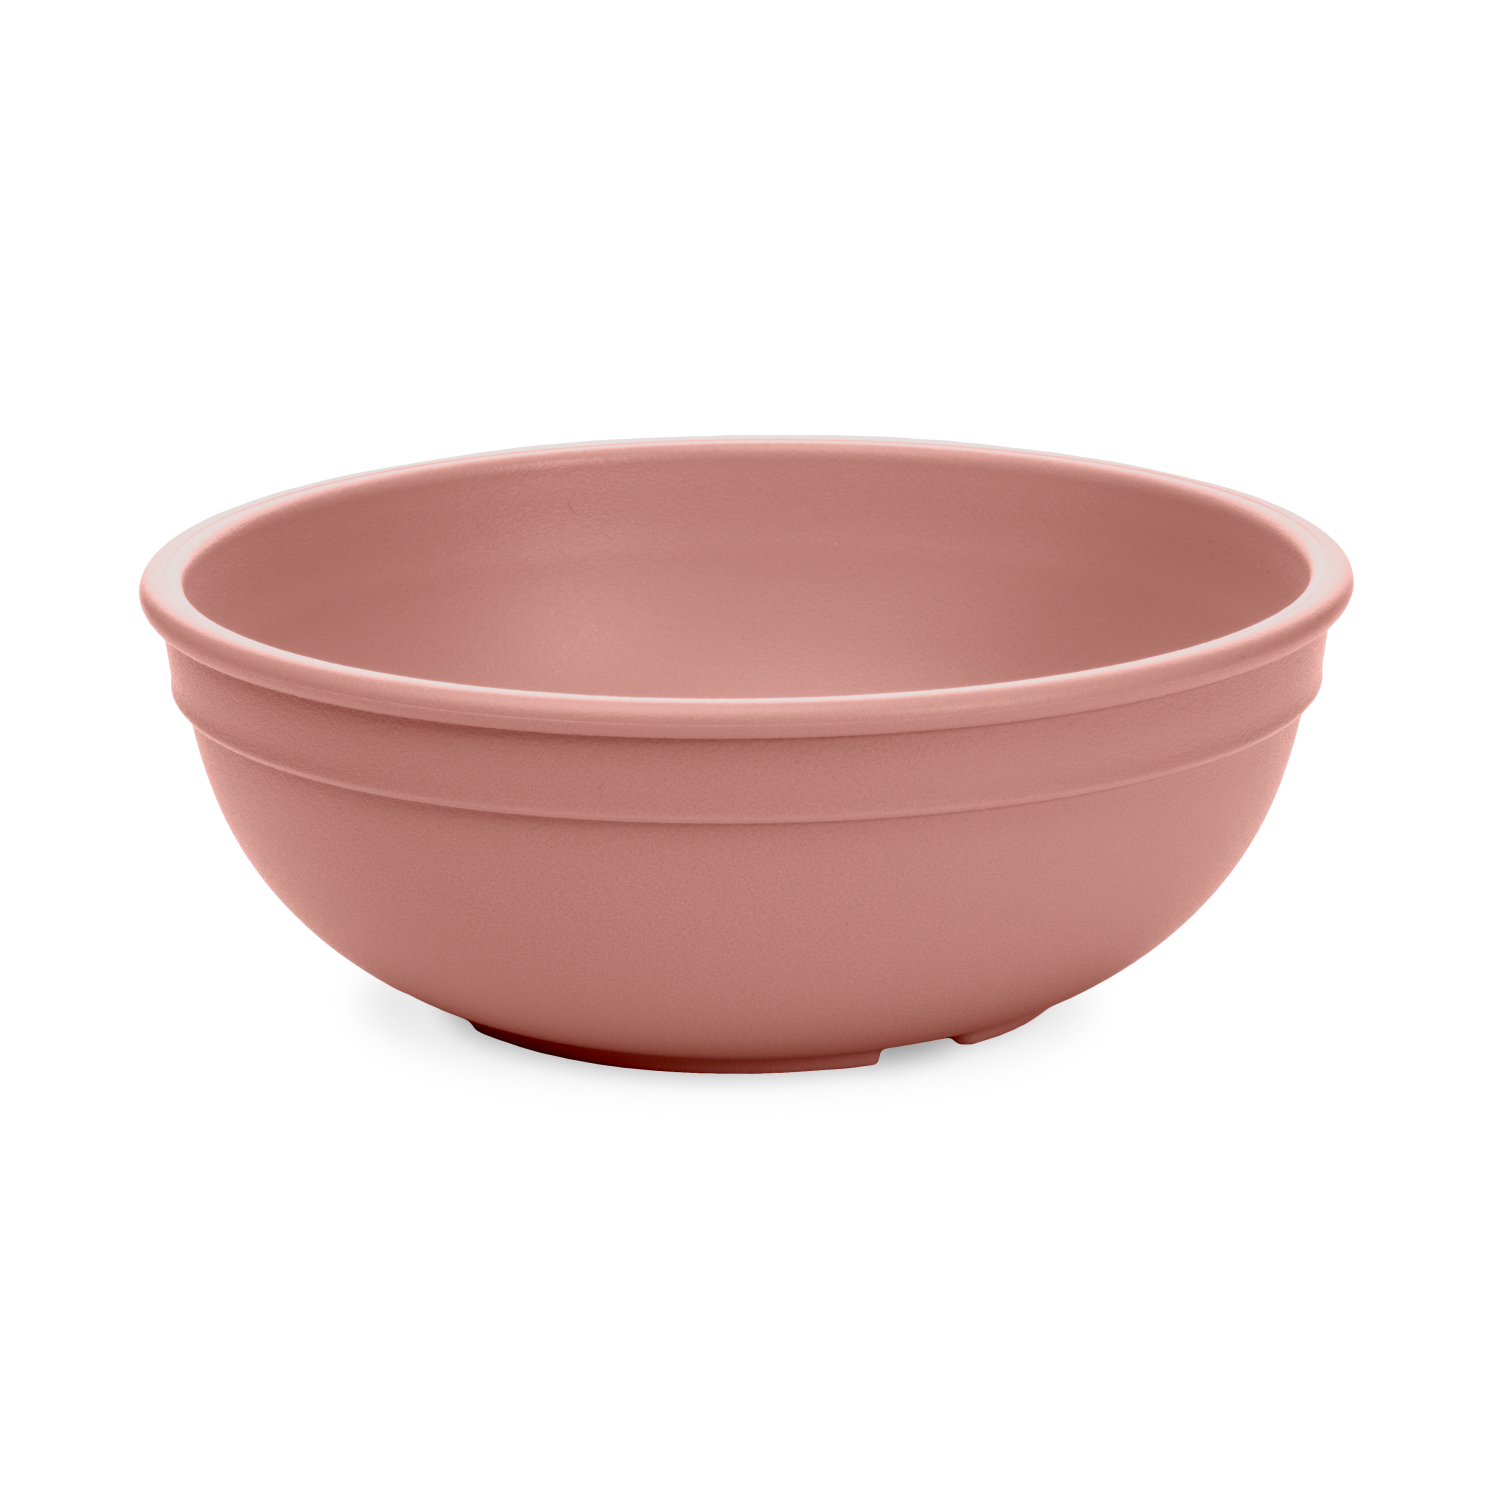 Reusable food bowl oval 1000ml - 144 pcs/box - Shop deSter